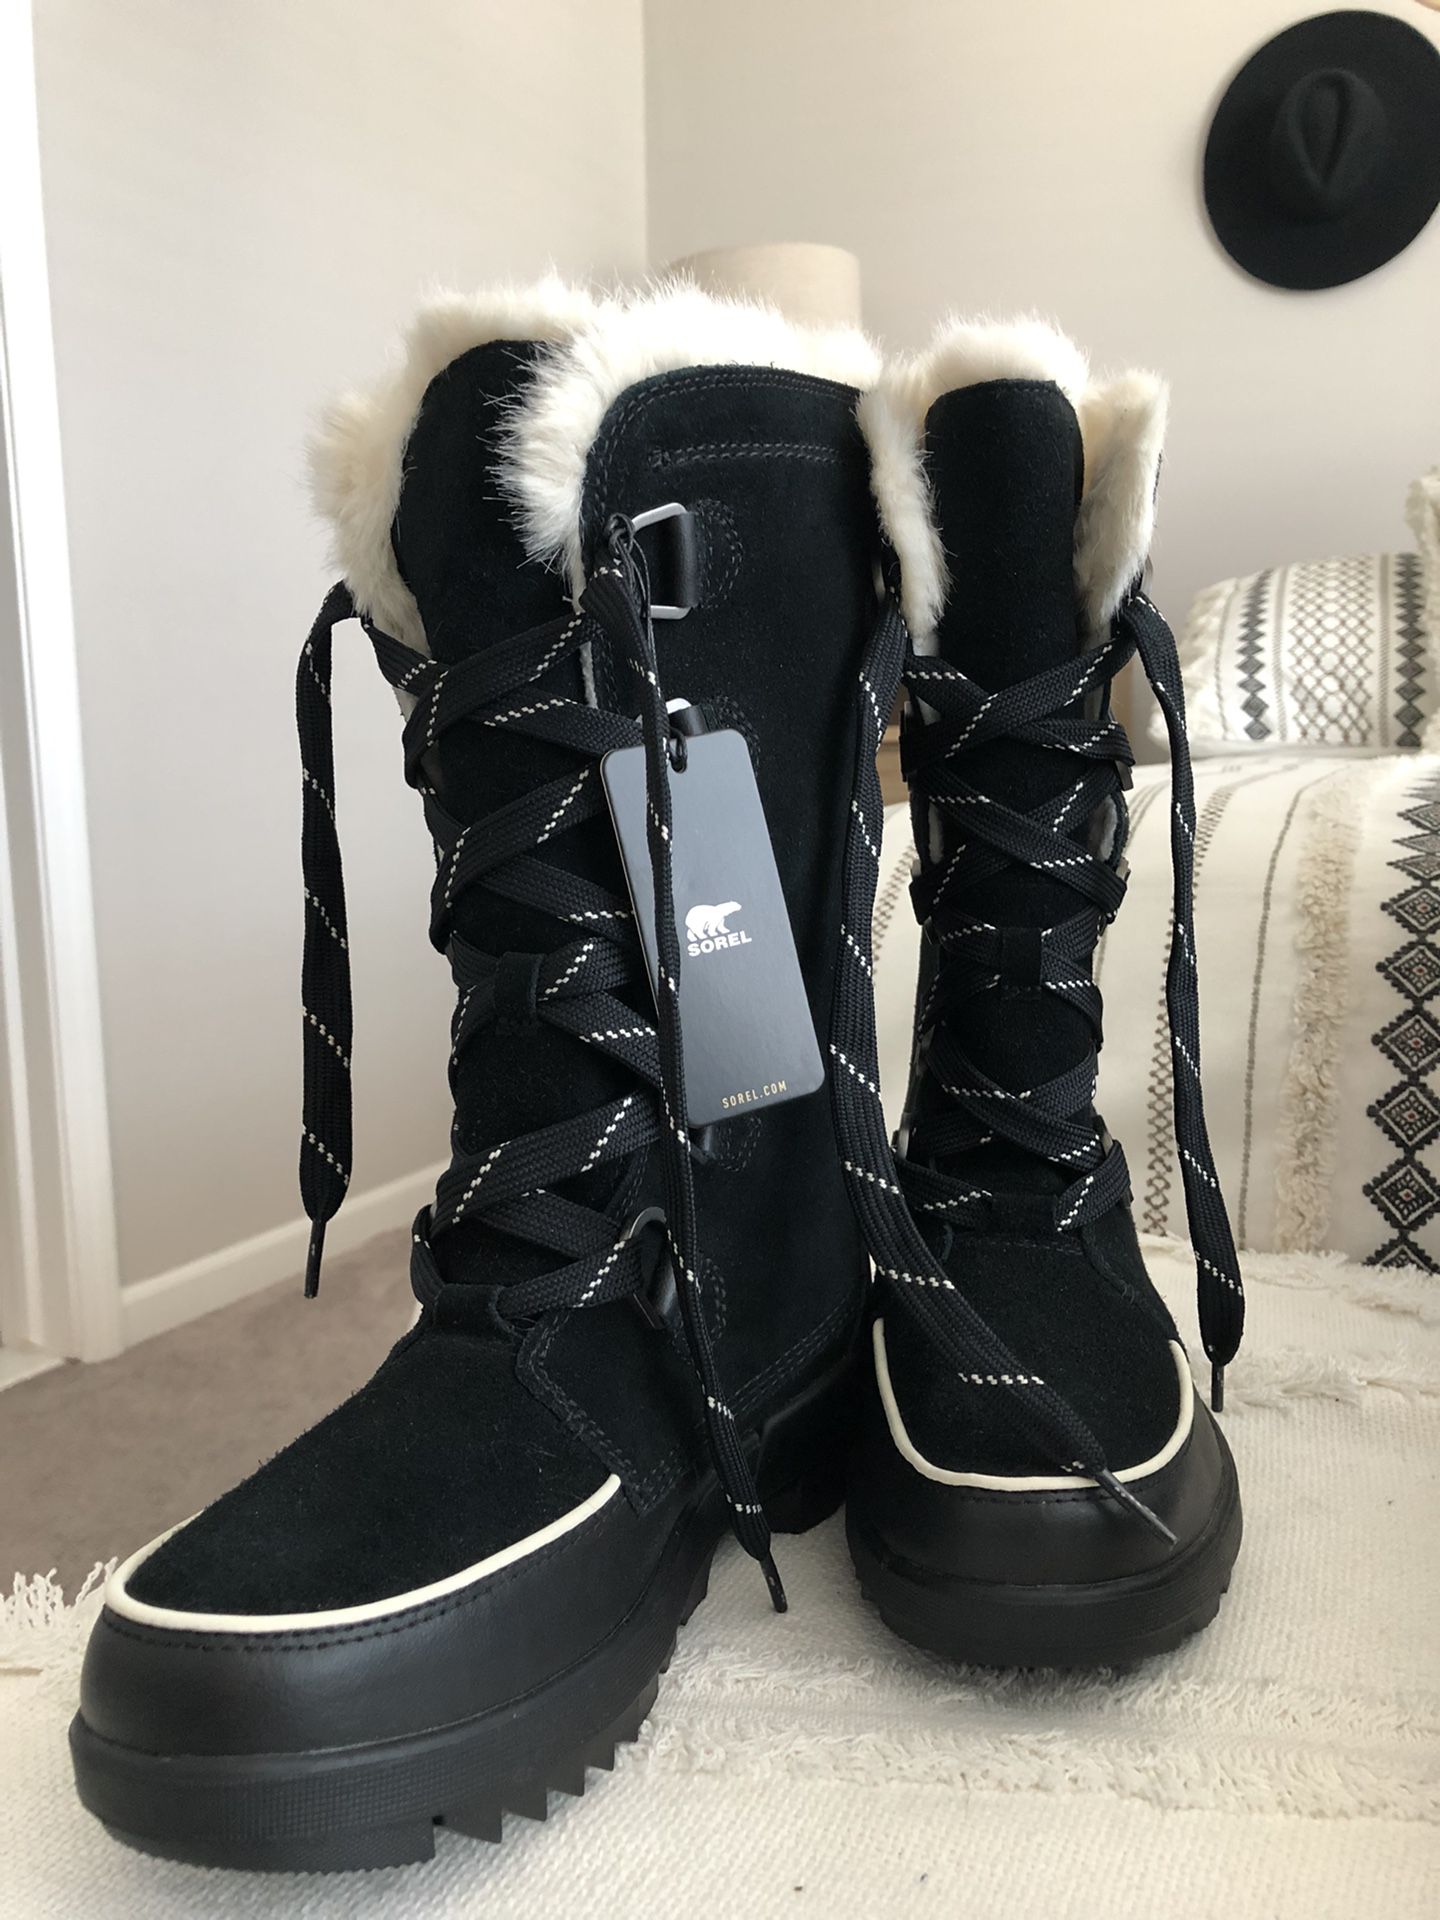 Sorel Winter Boots, Womens Size 8